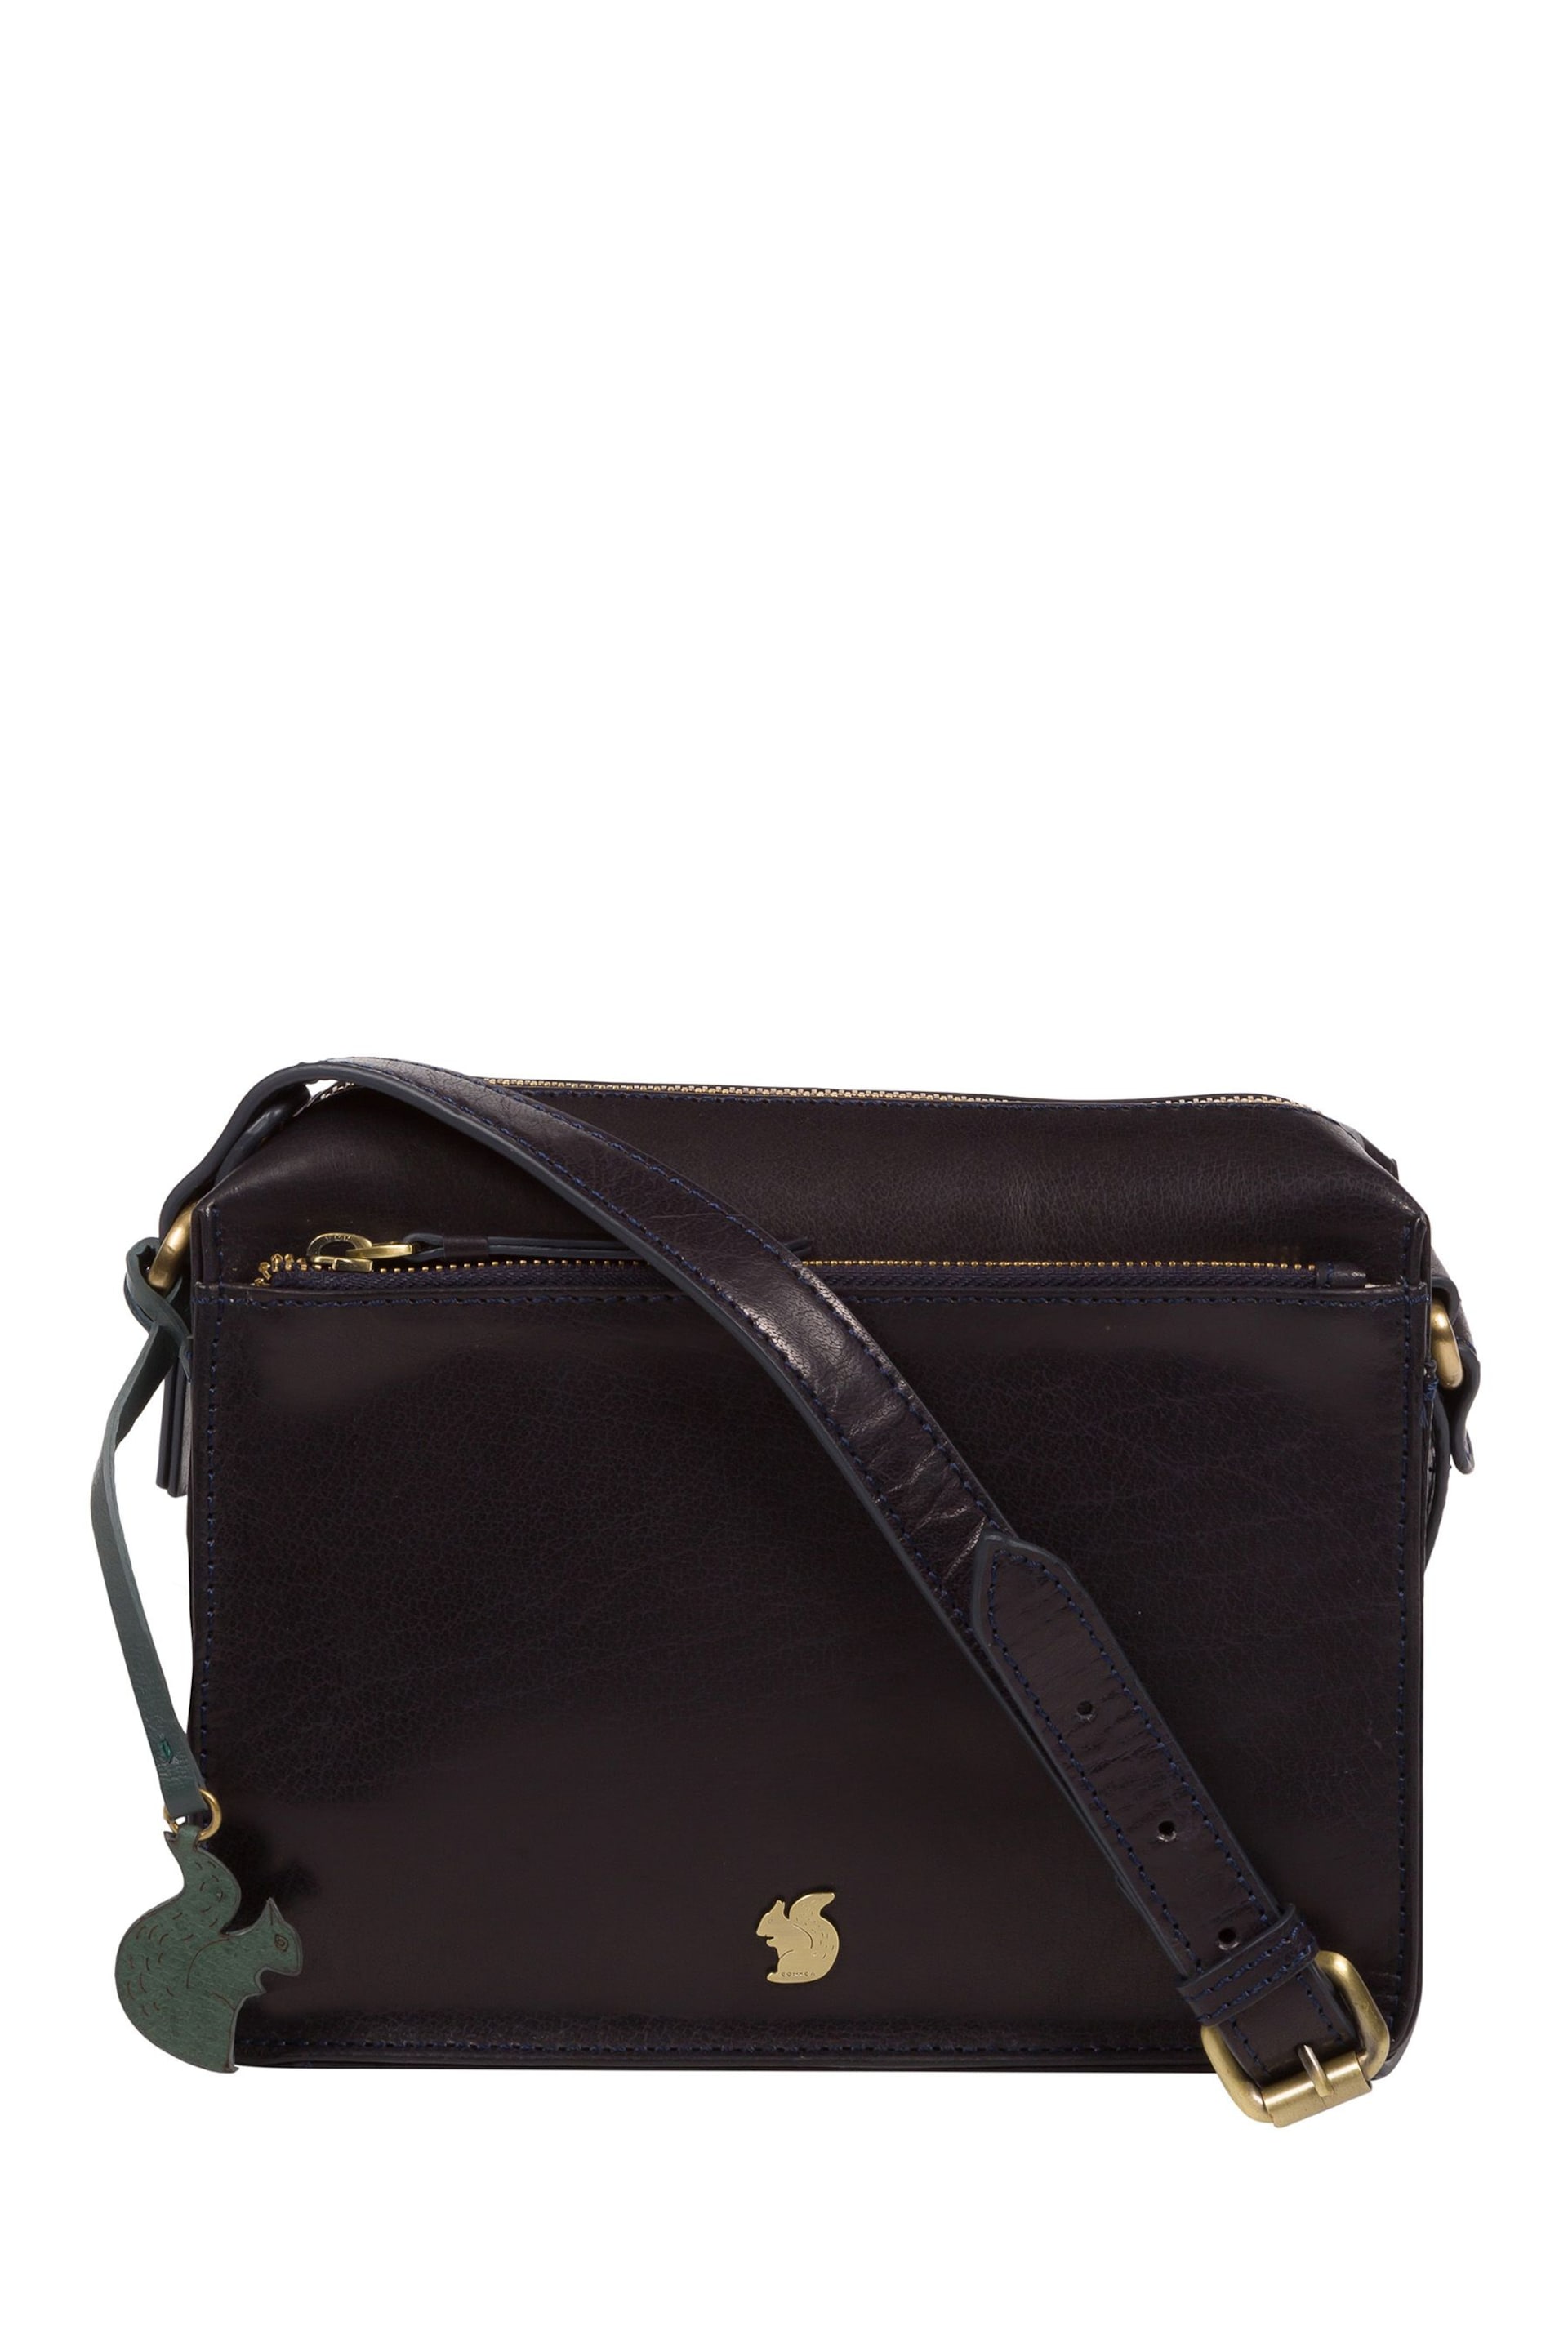 Conkca Aurora Leather Cross Body Bag - Image 1 of 6